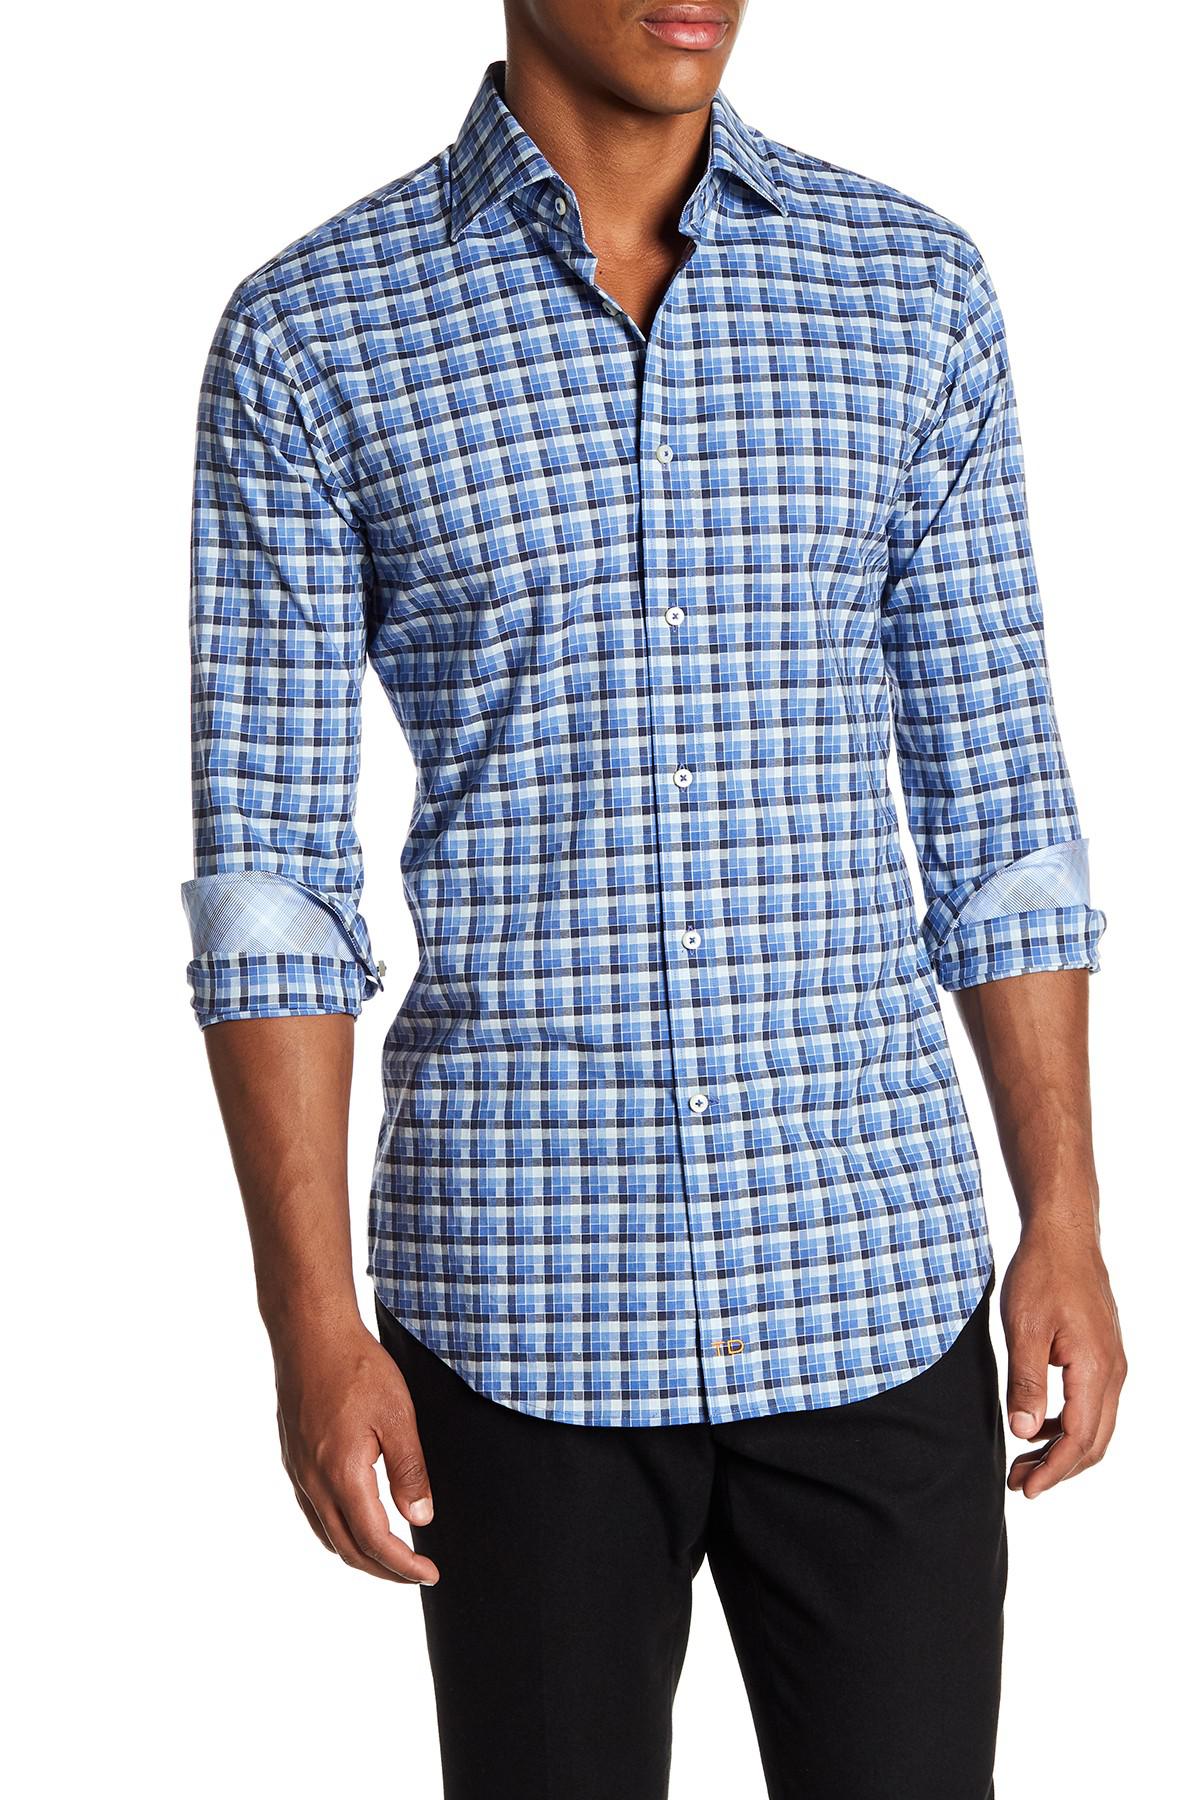 Lyst - Thomas Dean Check Print Regular Fit Woven Shirt in Blue for Men